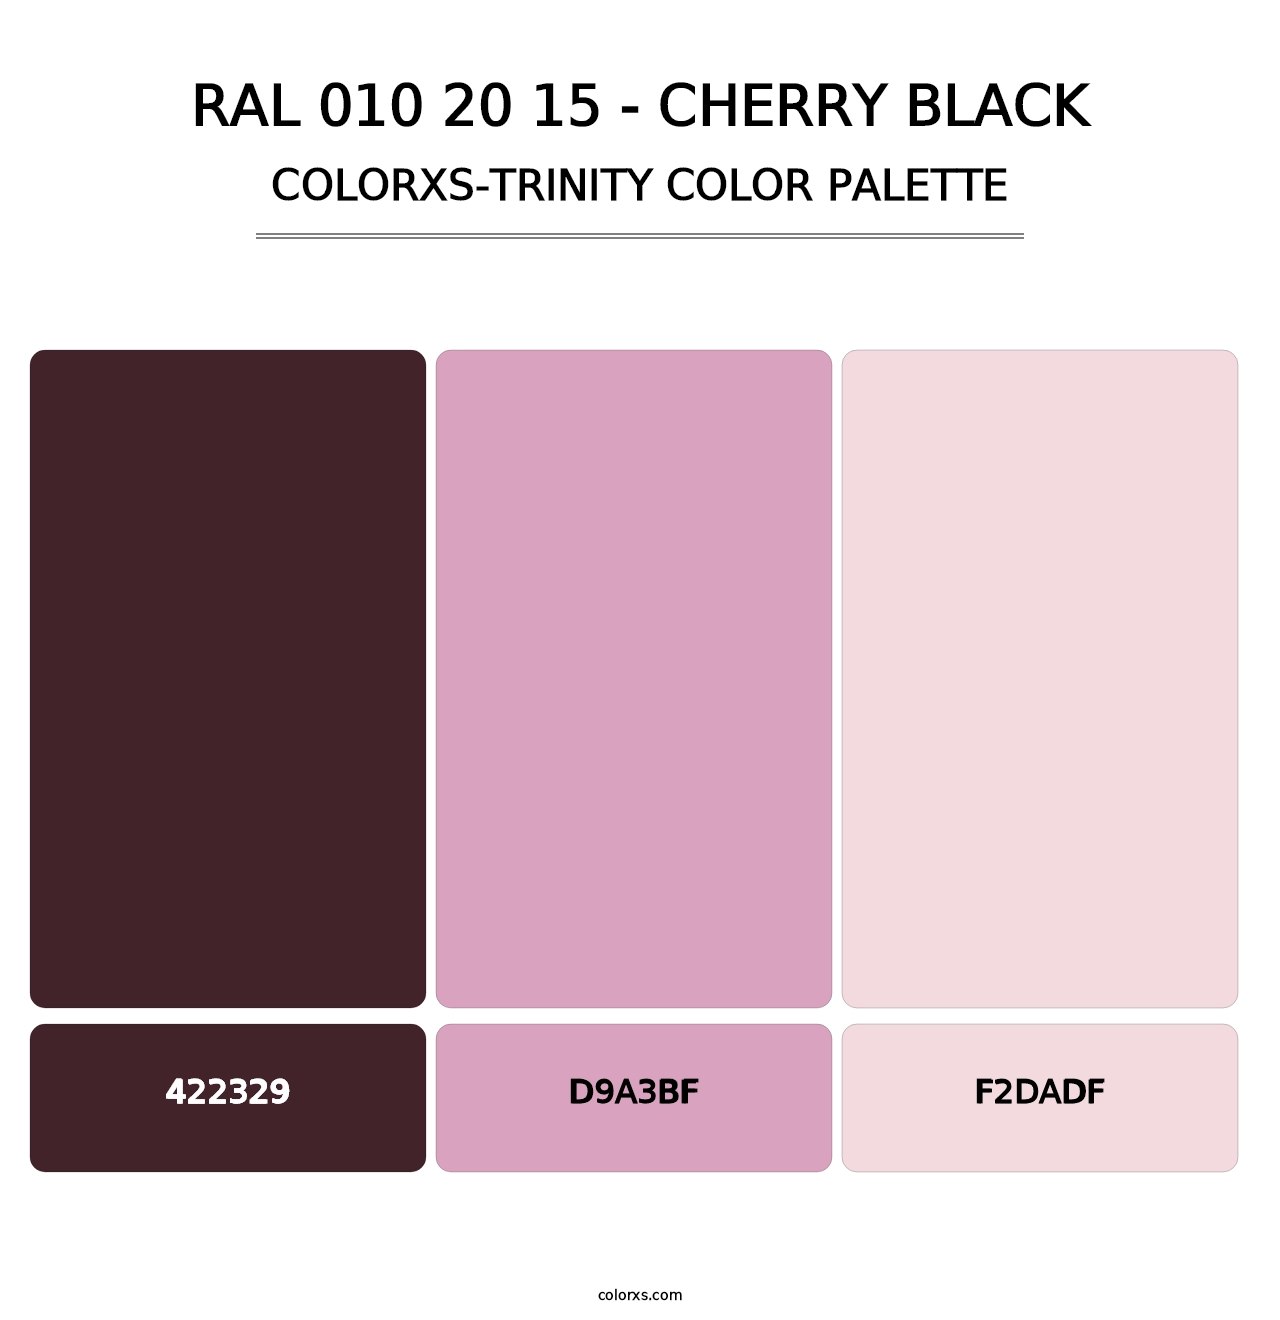 RAL 010 20 15 - Cherry Black - Colorxs Trinity Palette